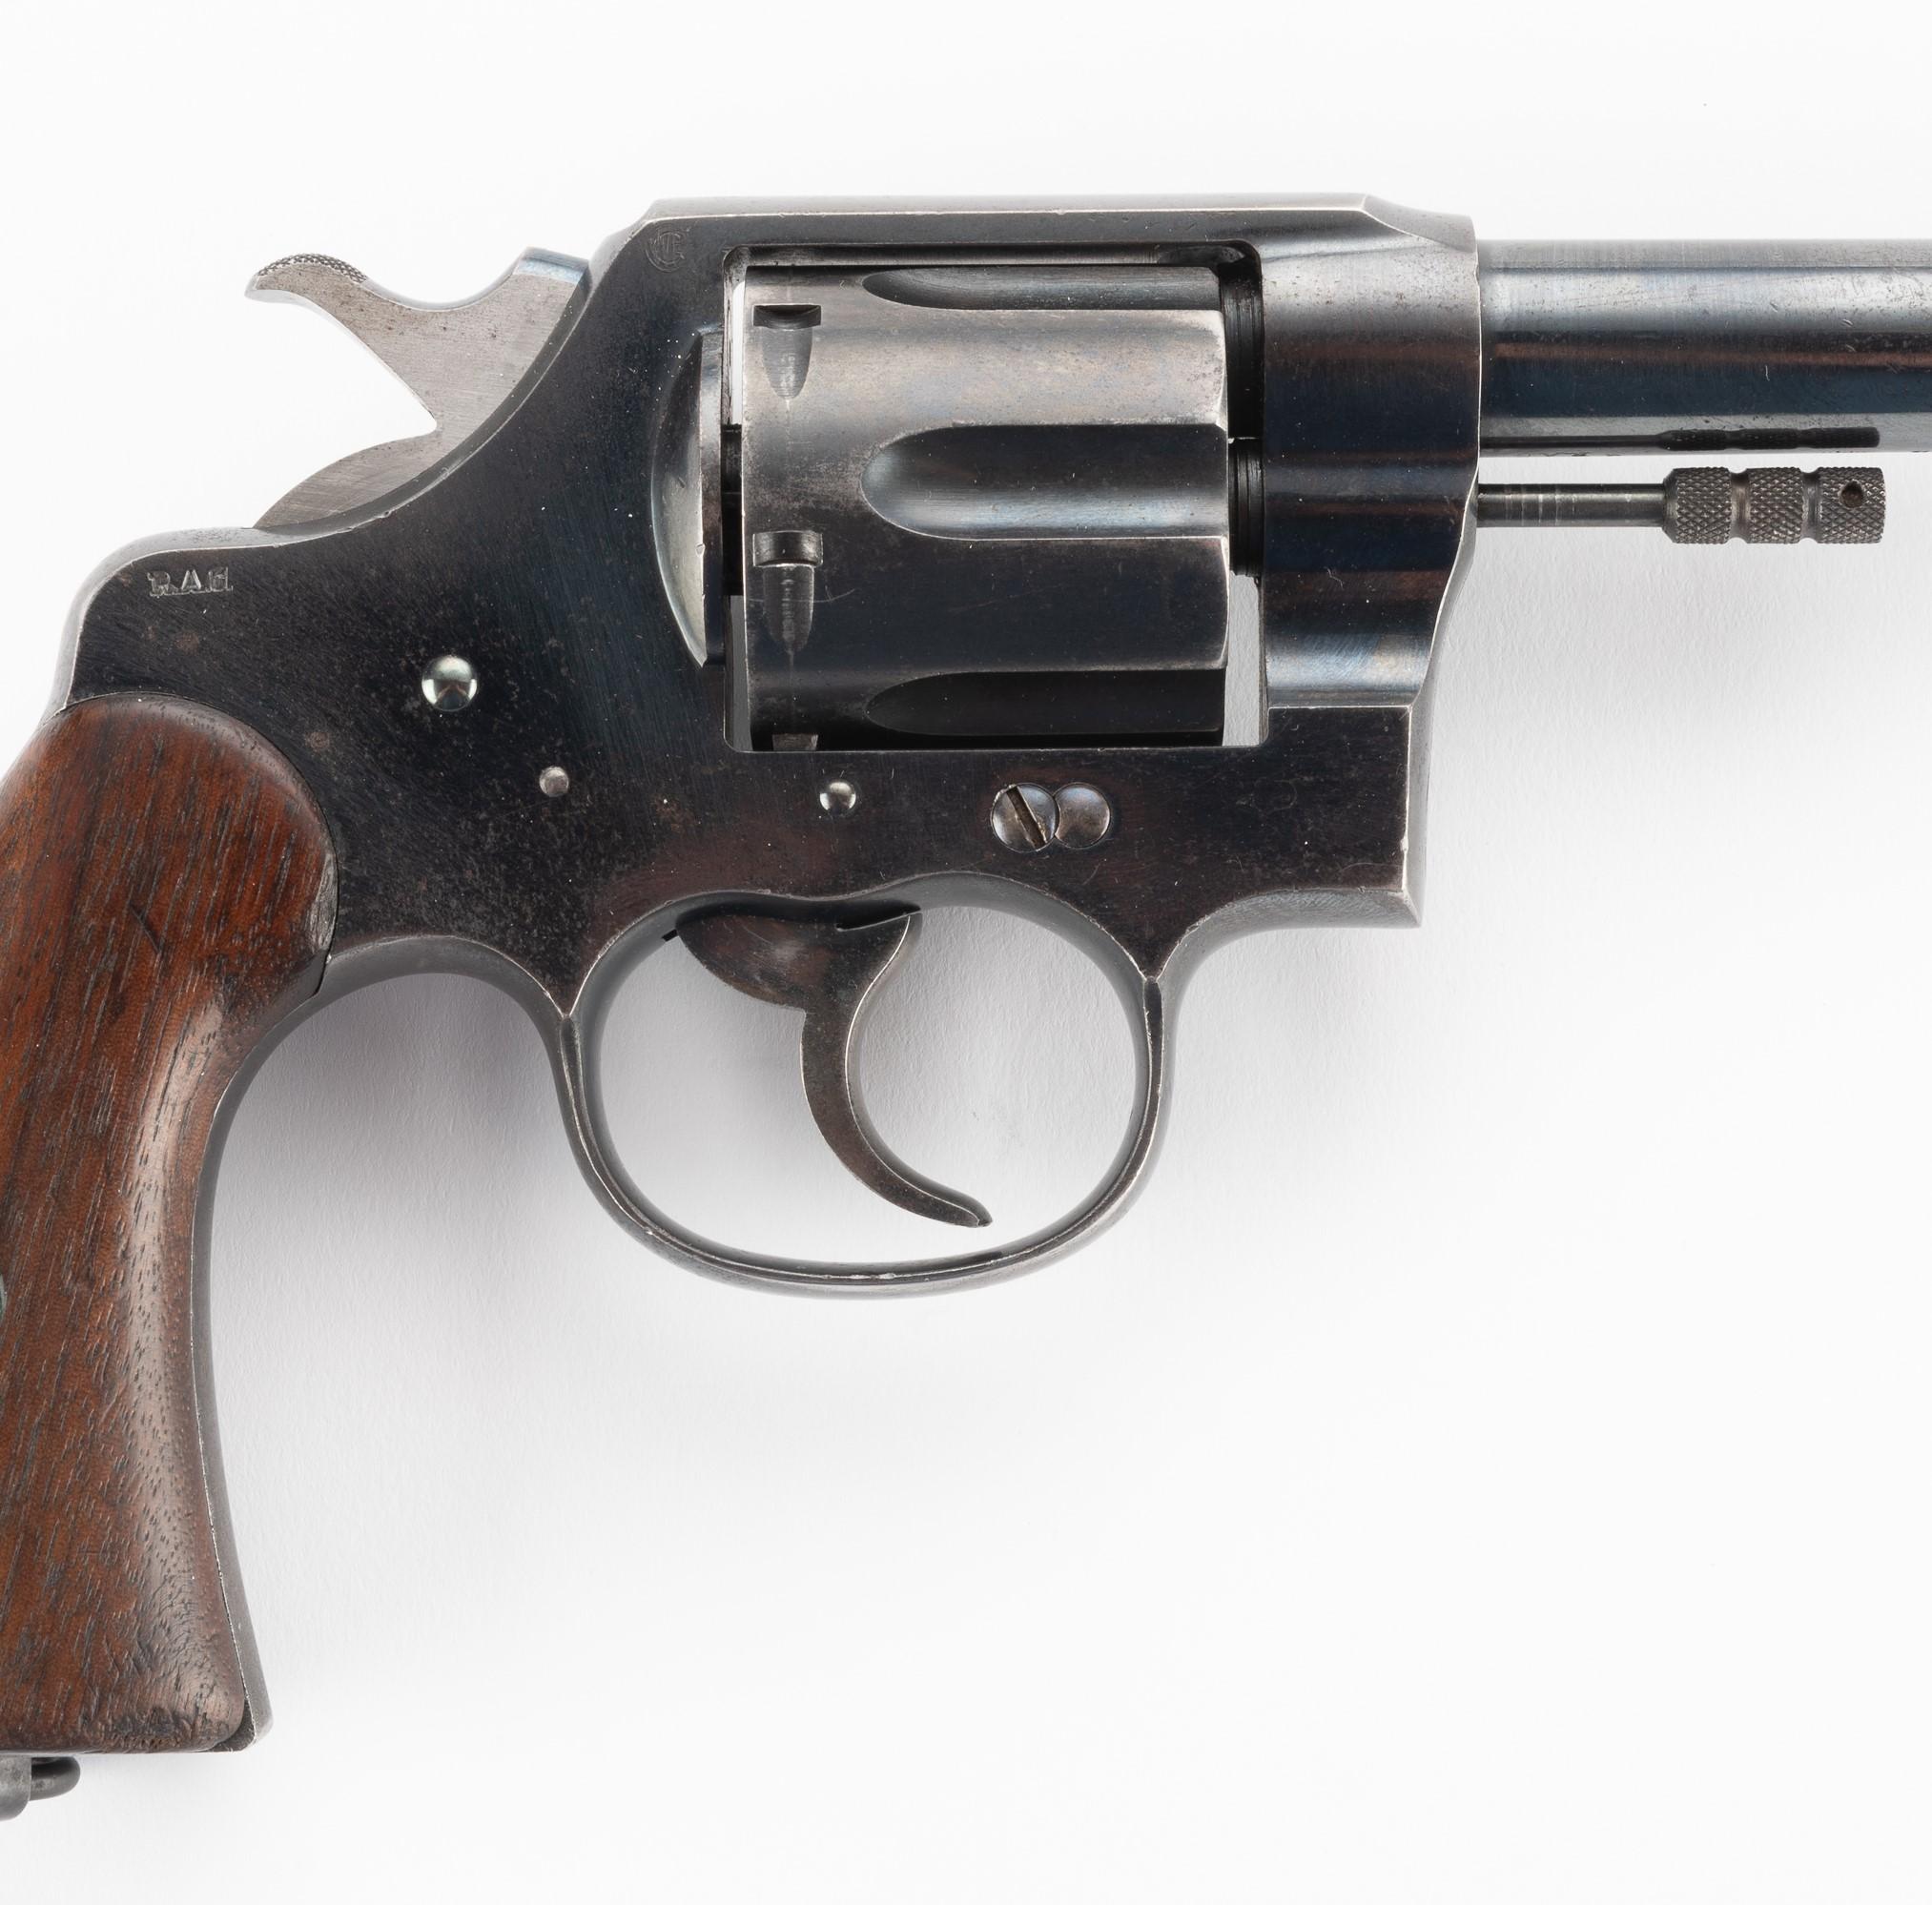 U.S. Army M1909. 45 Long Colt Revolver